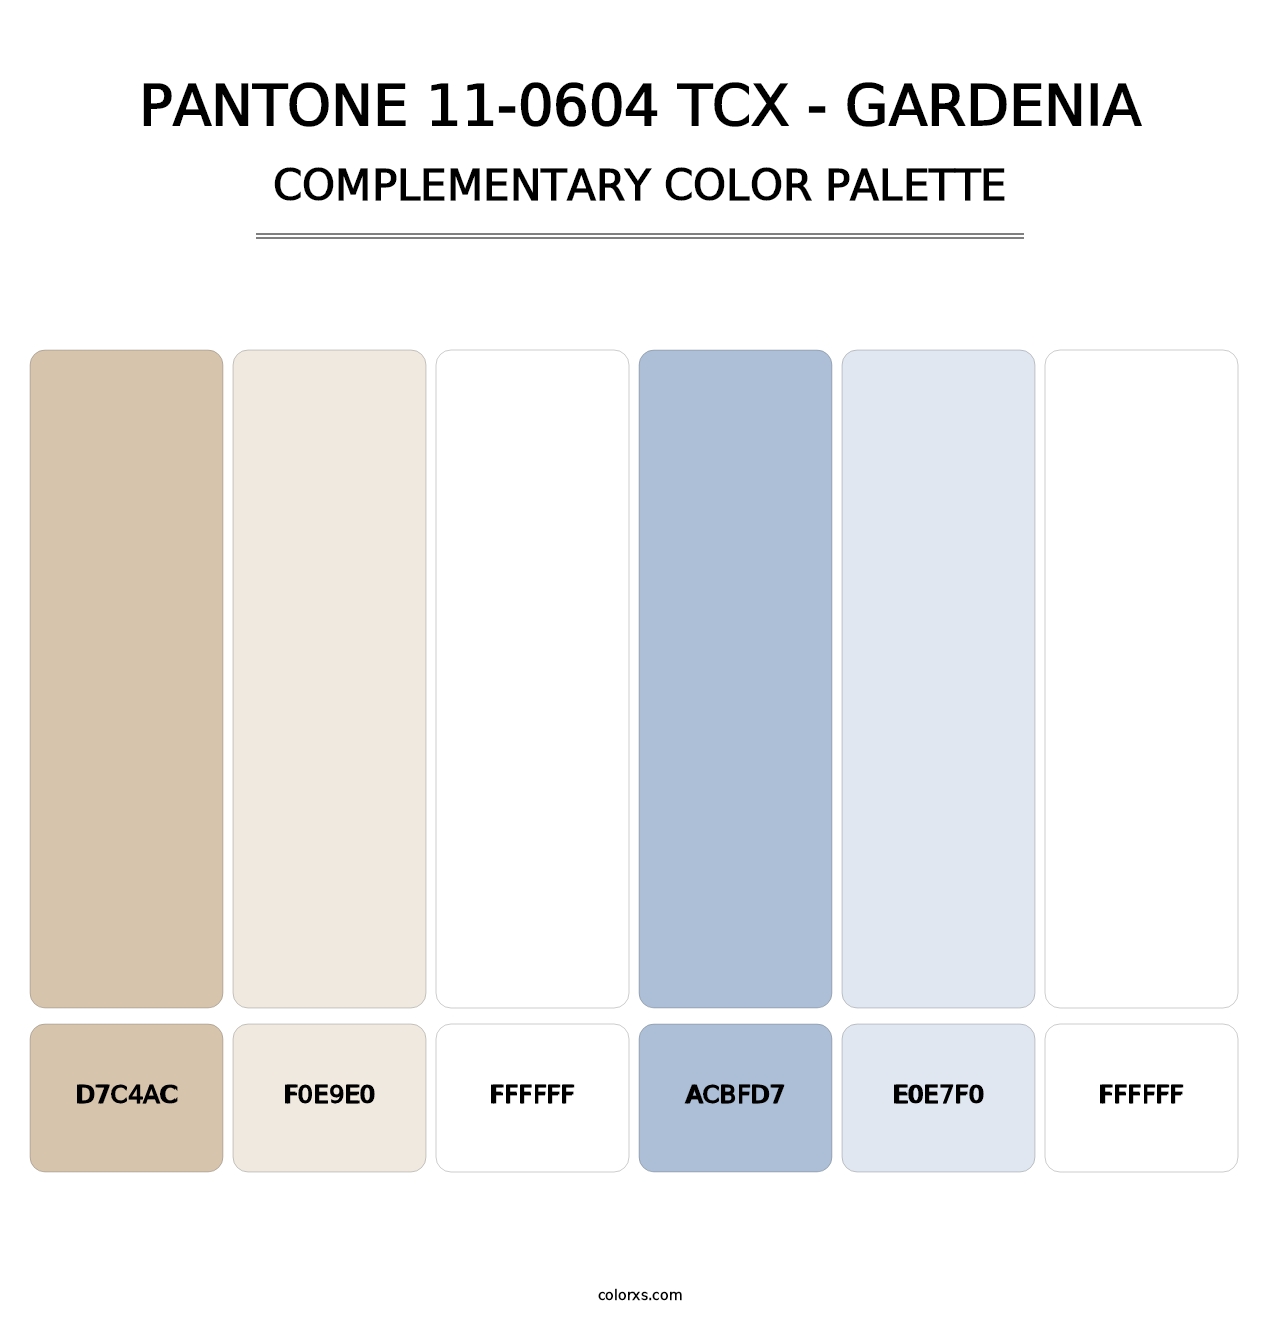 PANTONE 11-0604 TCX - Gardenia - Complementary Color Palette